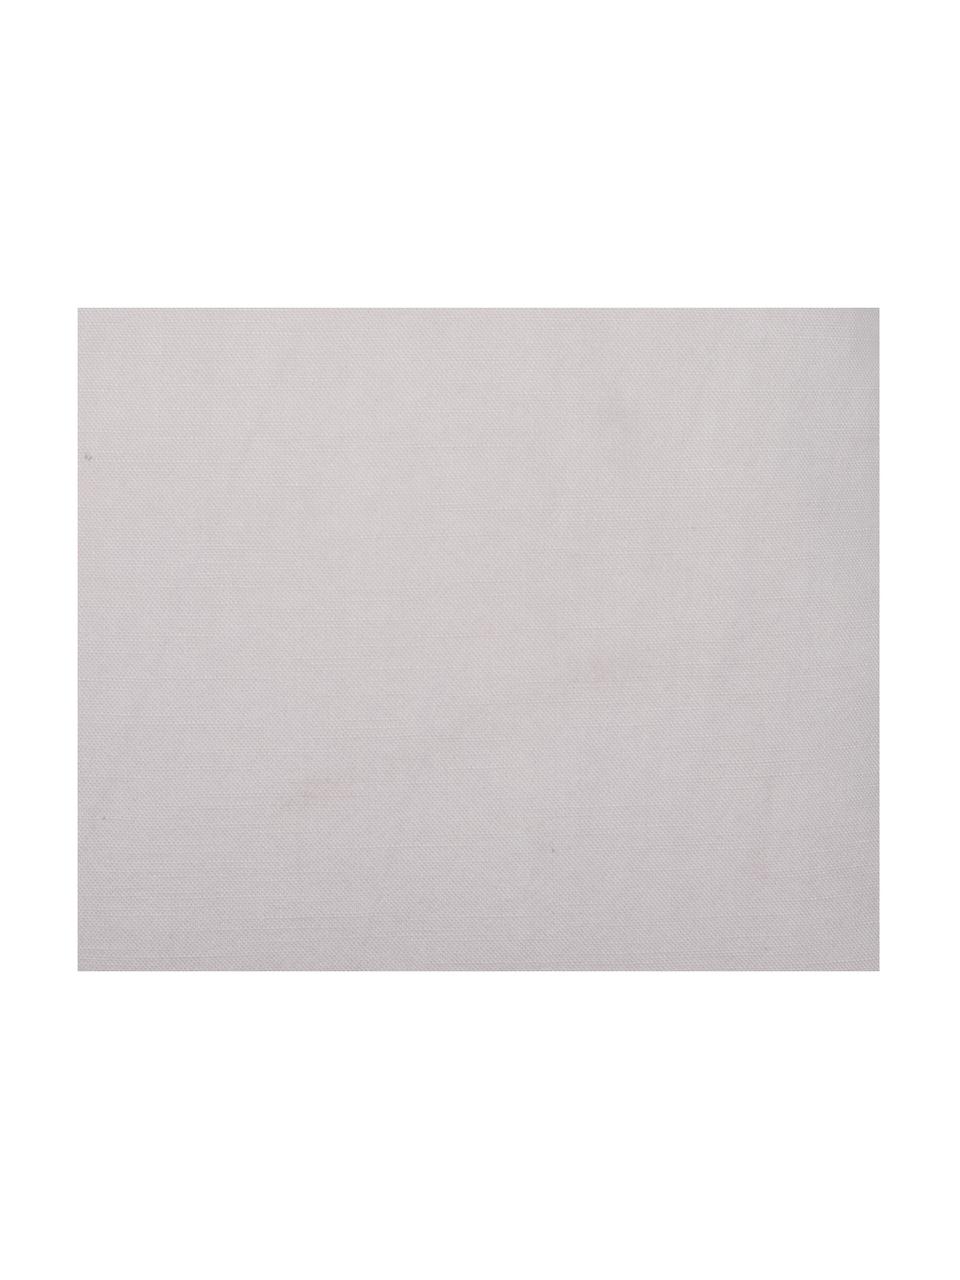 Kissenhülle T-Easy, Baumwolle, Sandfarben, Weiß, 50 x 50 cm